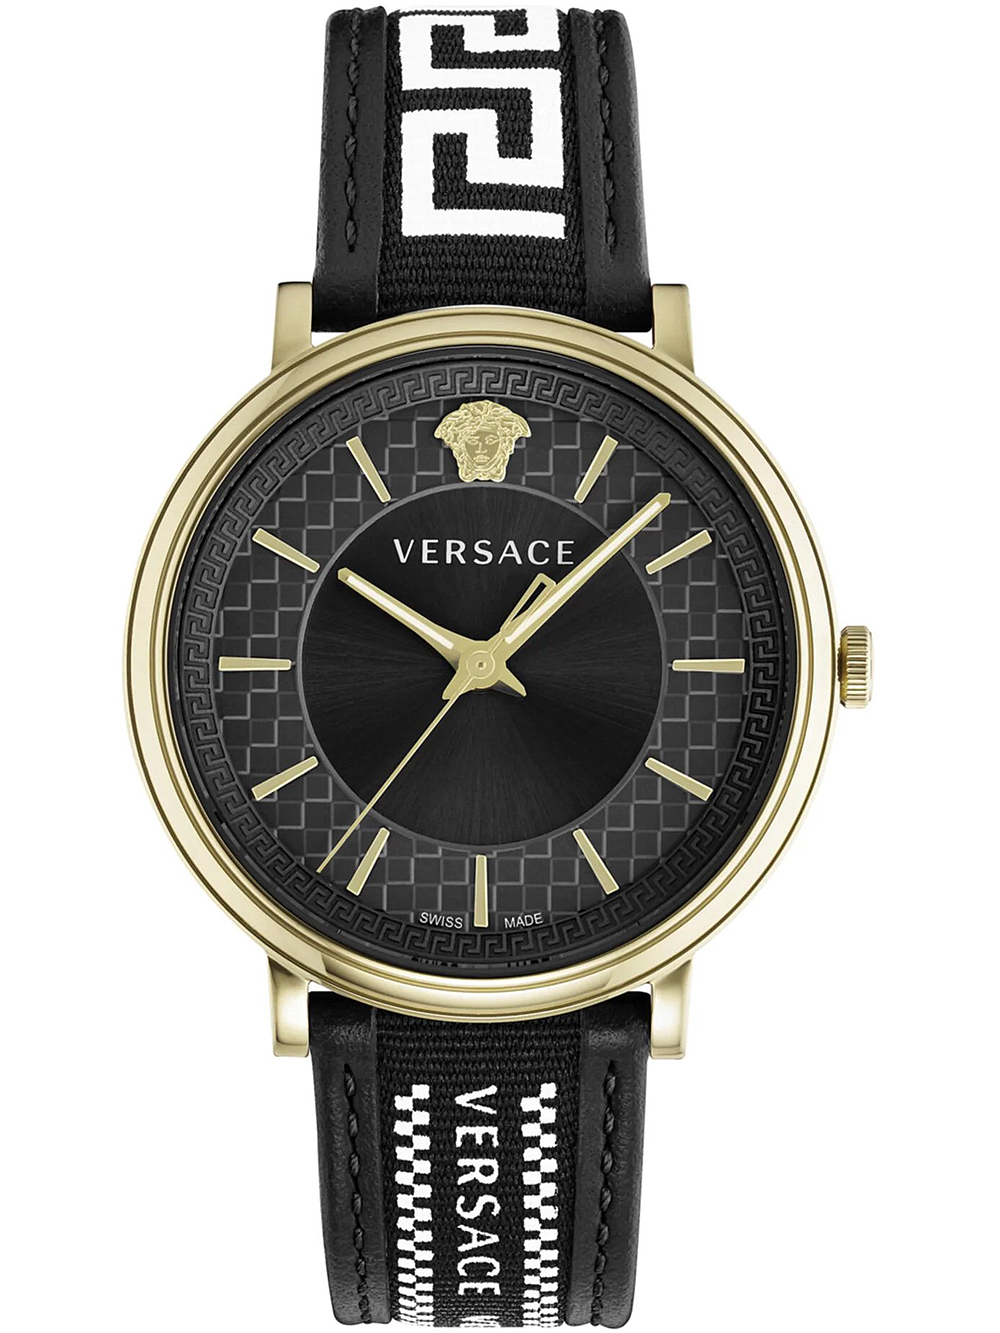 Zegarek męski Versace VE5A01921 V-Circle